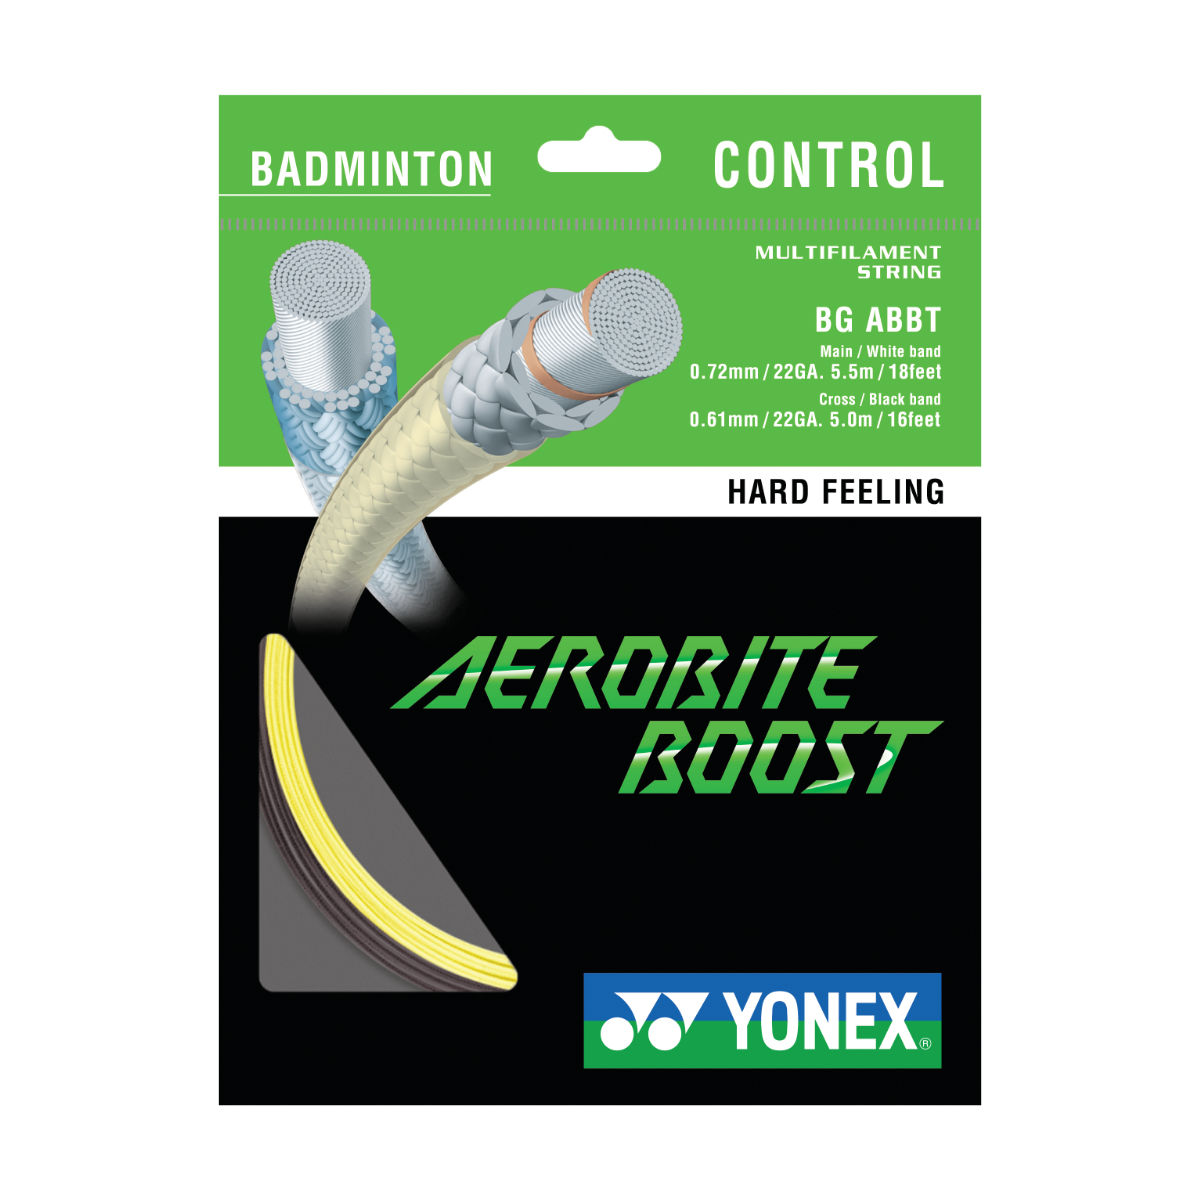 YONEX Badminton Saite - AEROBITE BOOST SETDetailbild - 0